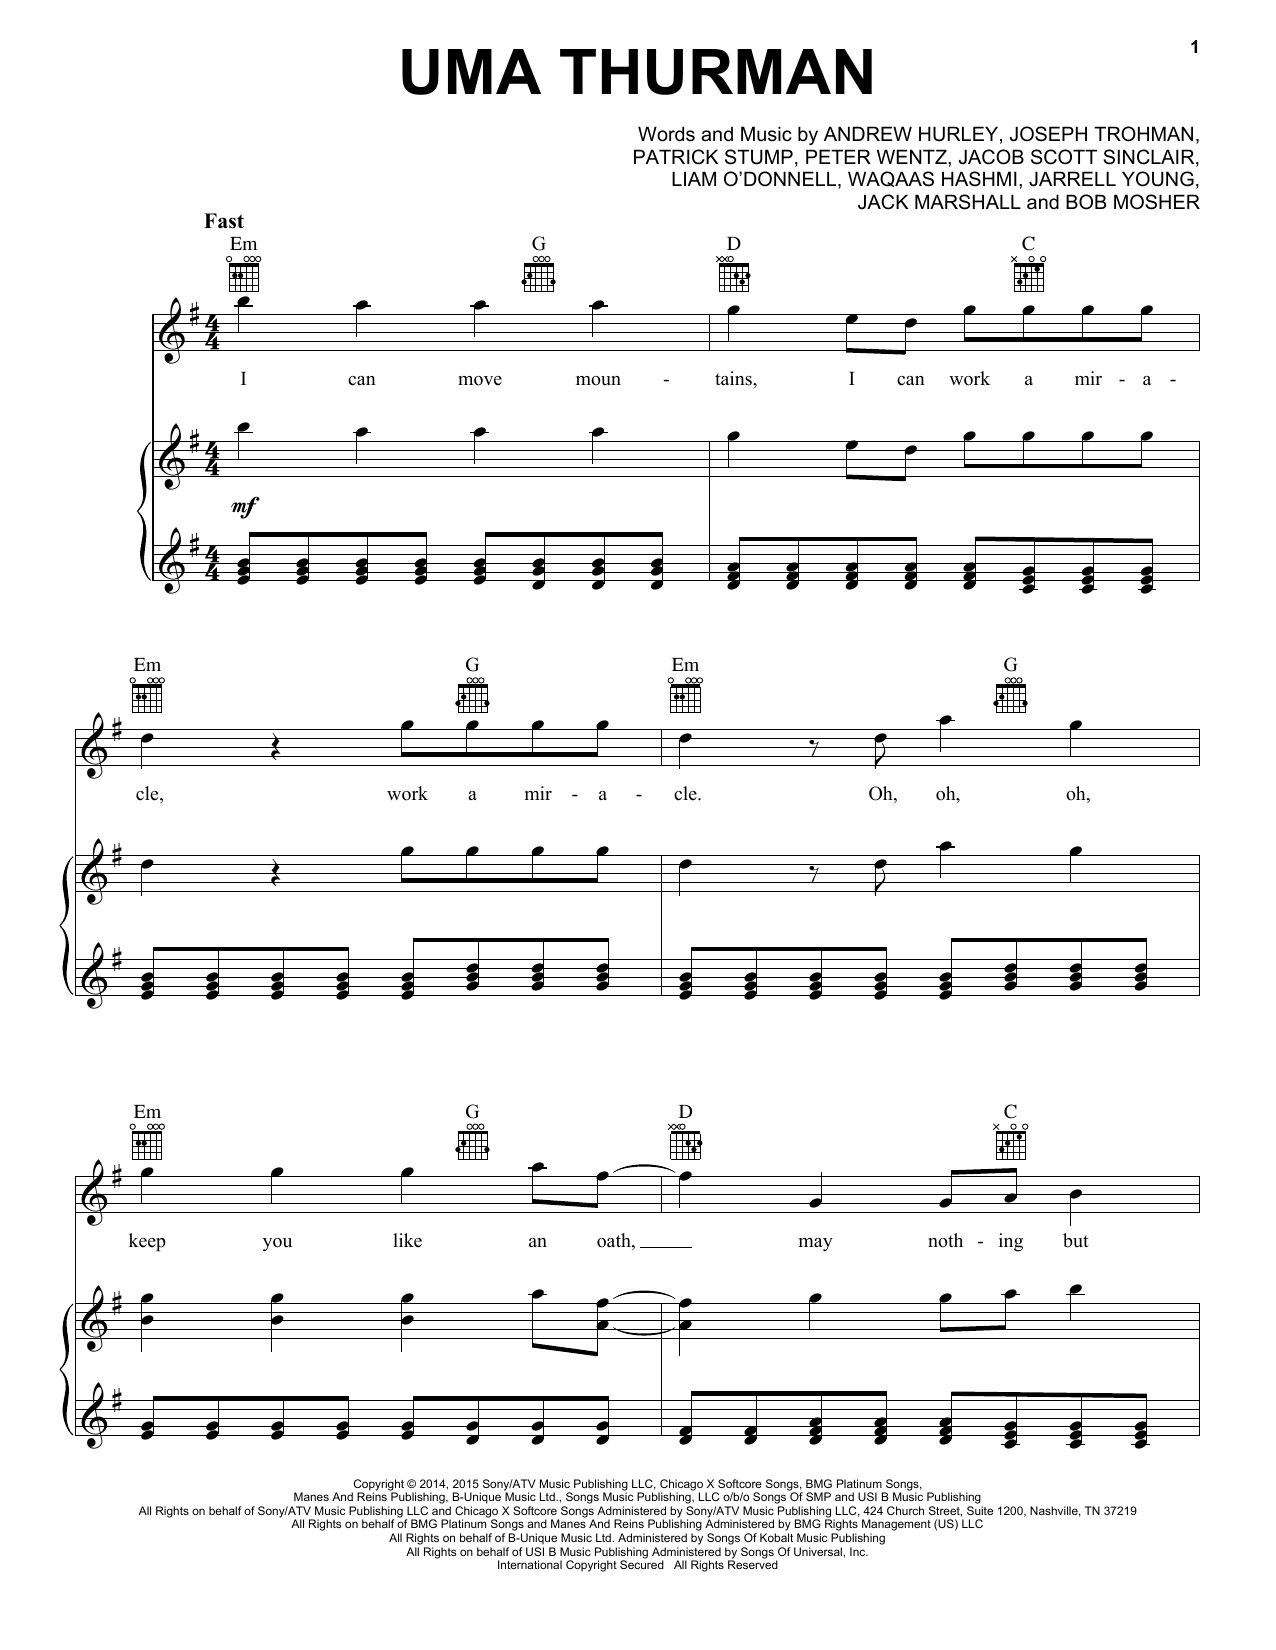 Fall Out Boy Uma Thurman Sheet Music Notes & Chords for Guitar Tab - Download or Print PDF